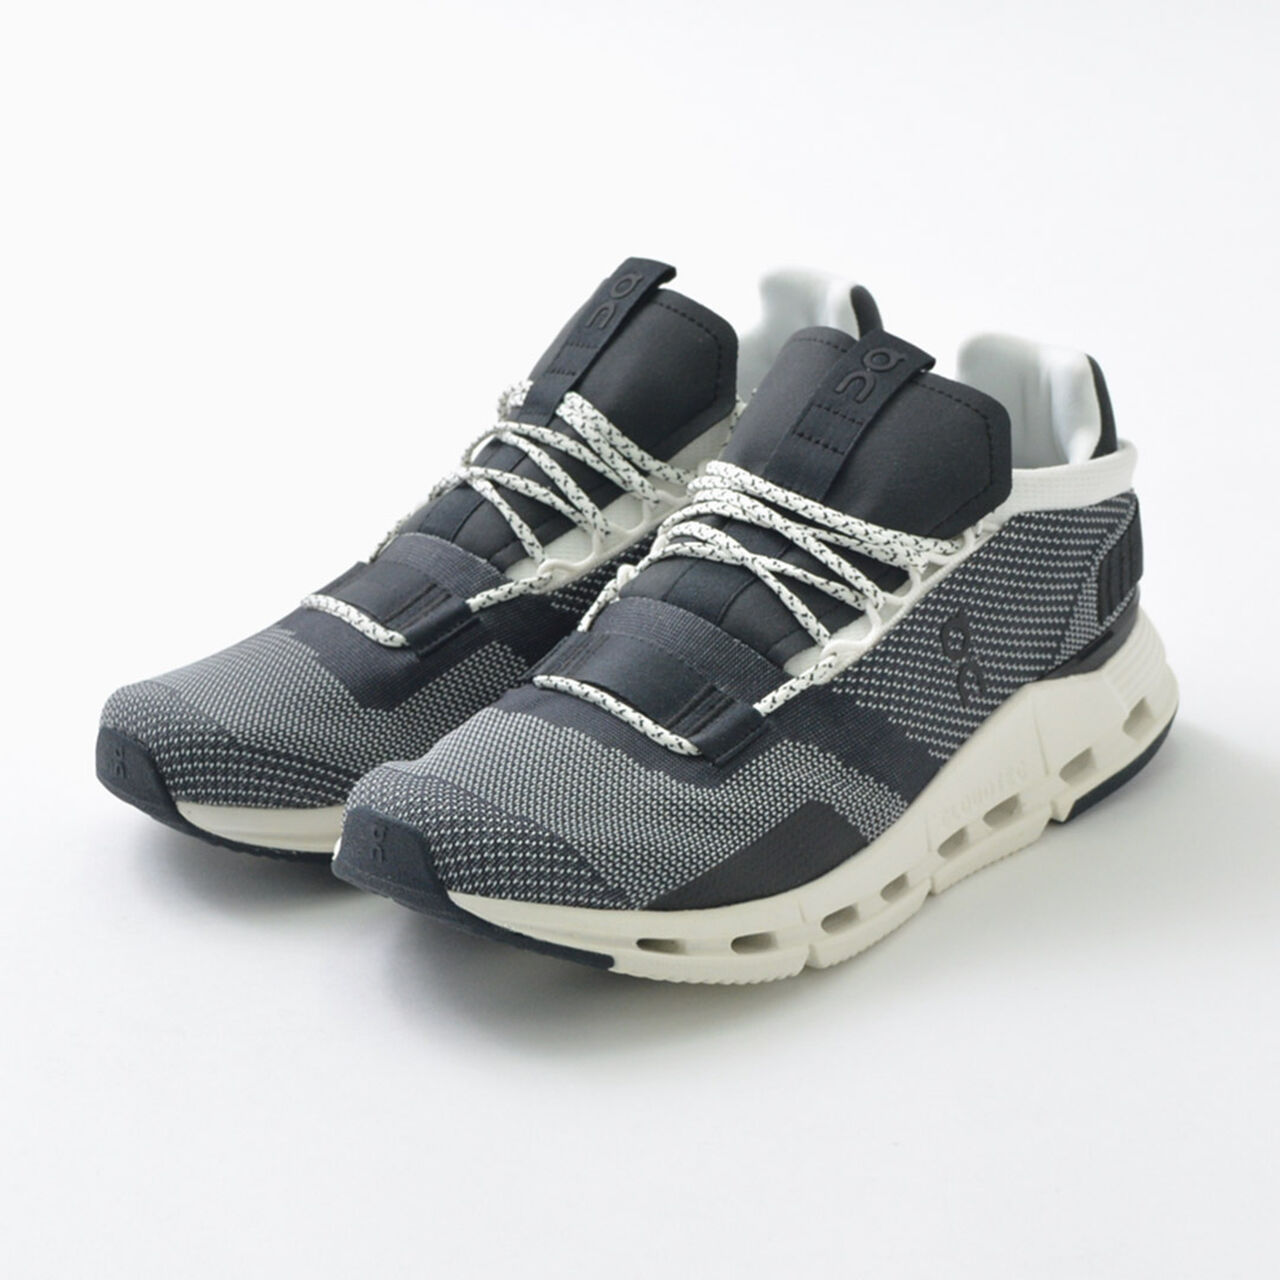 Cloud Nova Sneaker,Black_White, large image number 0